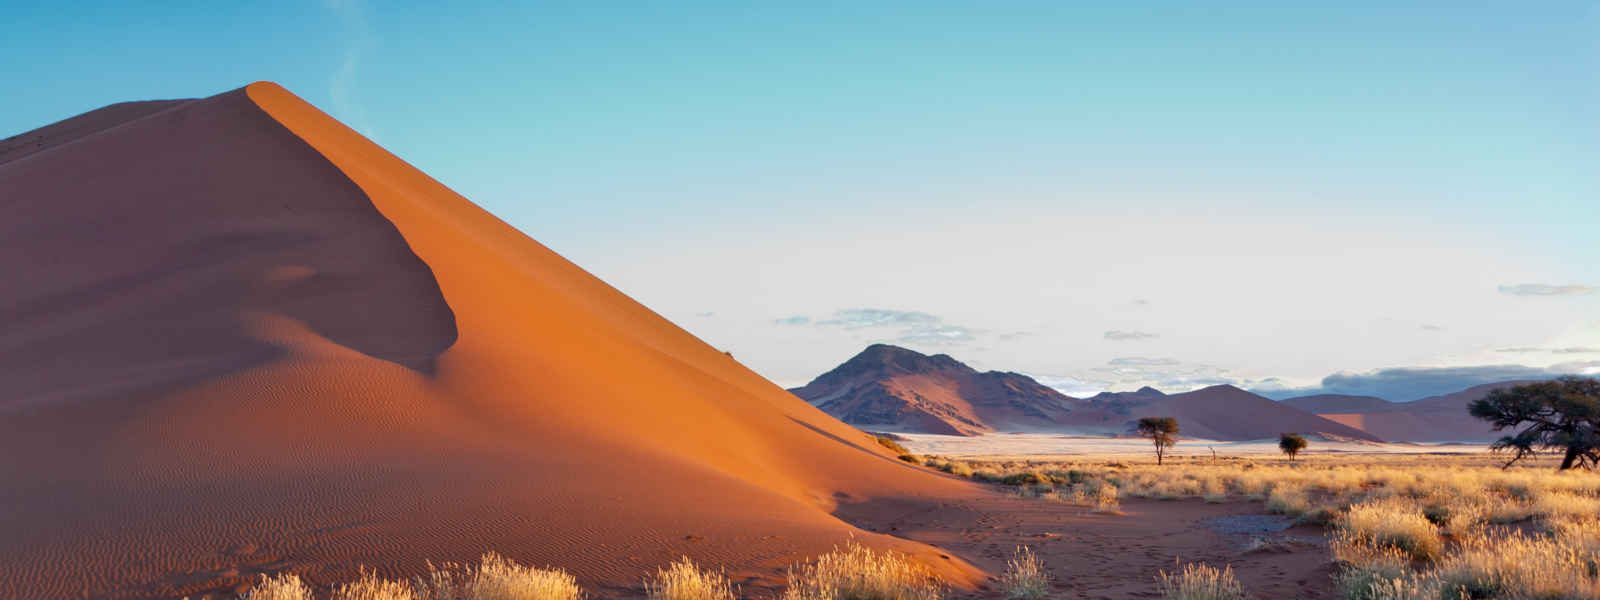 Dunes de Sossusvlei, Désert de Namib, Namibie